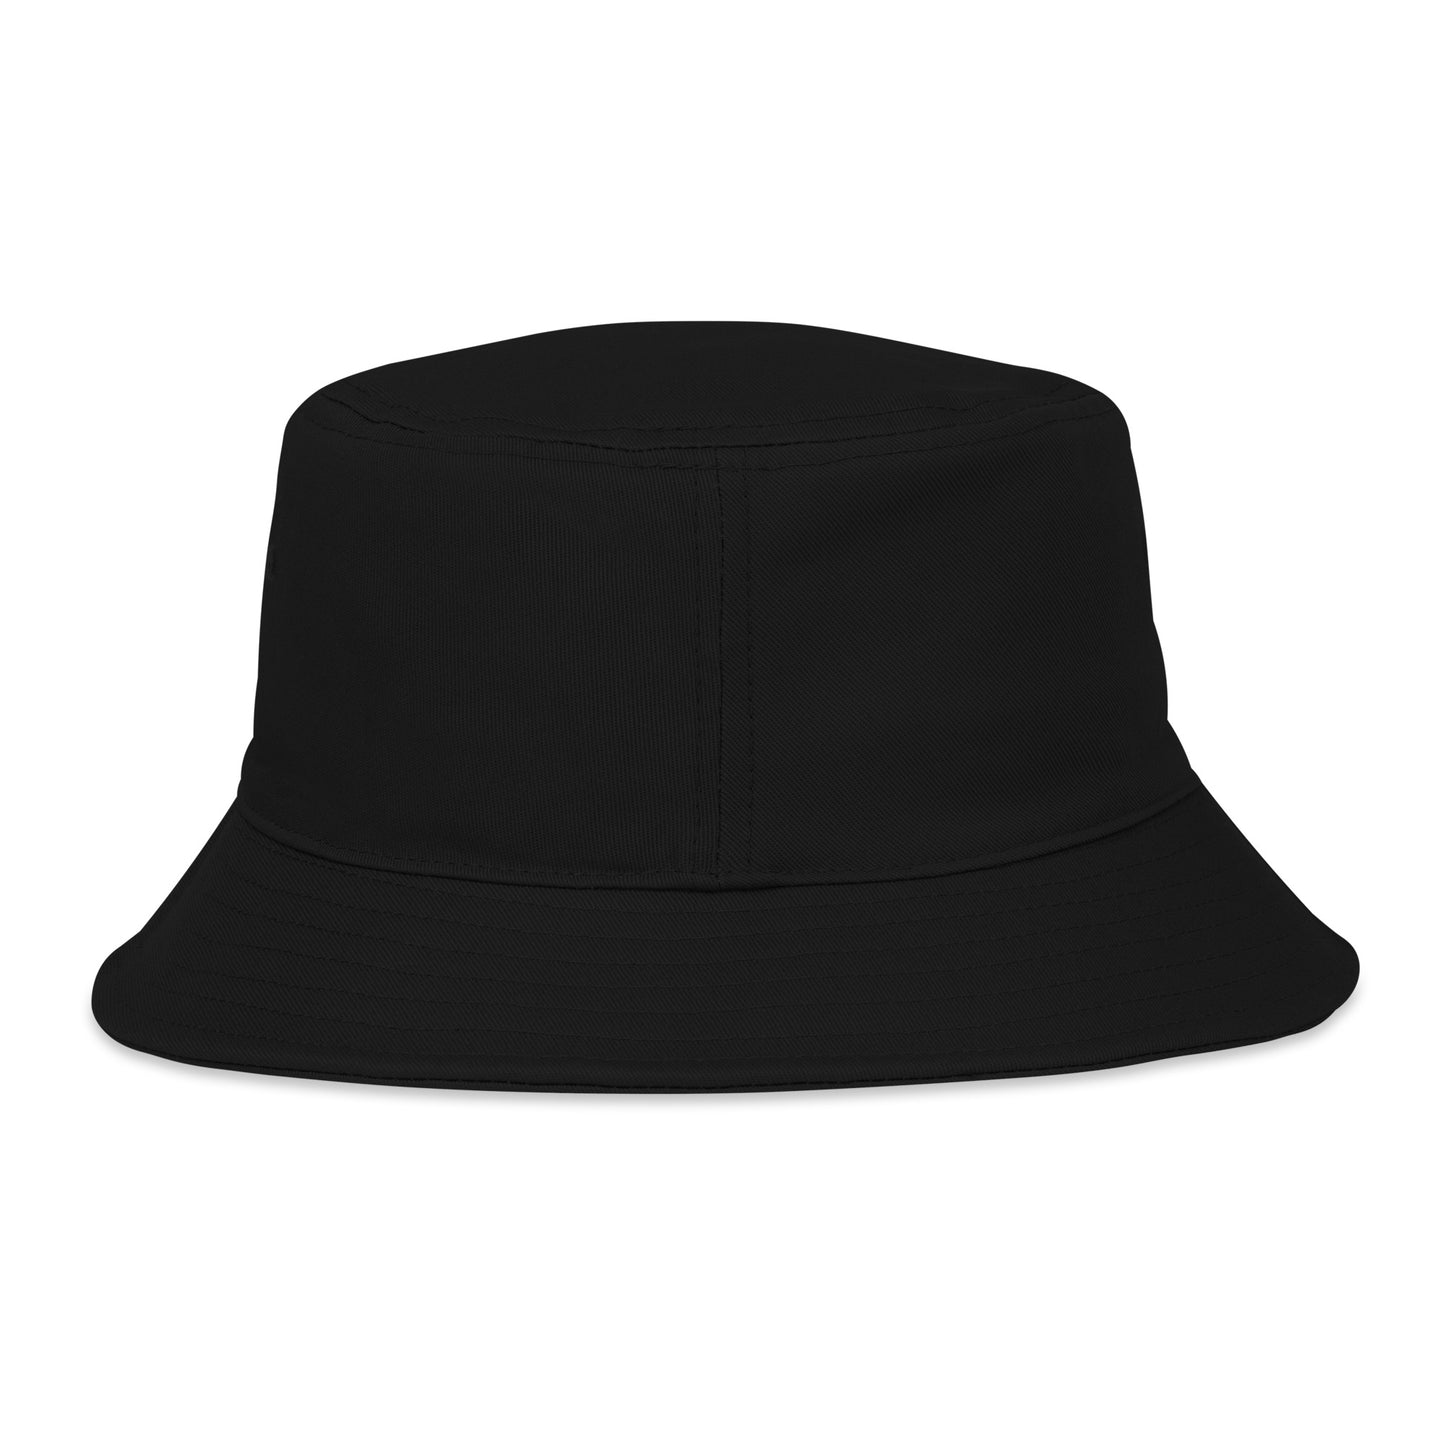 Coldest Football bucket hat